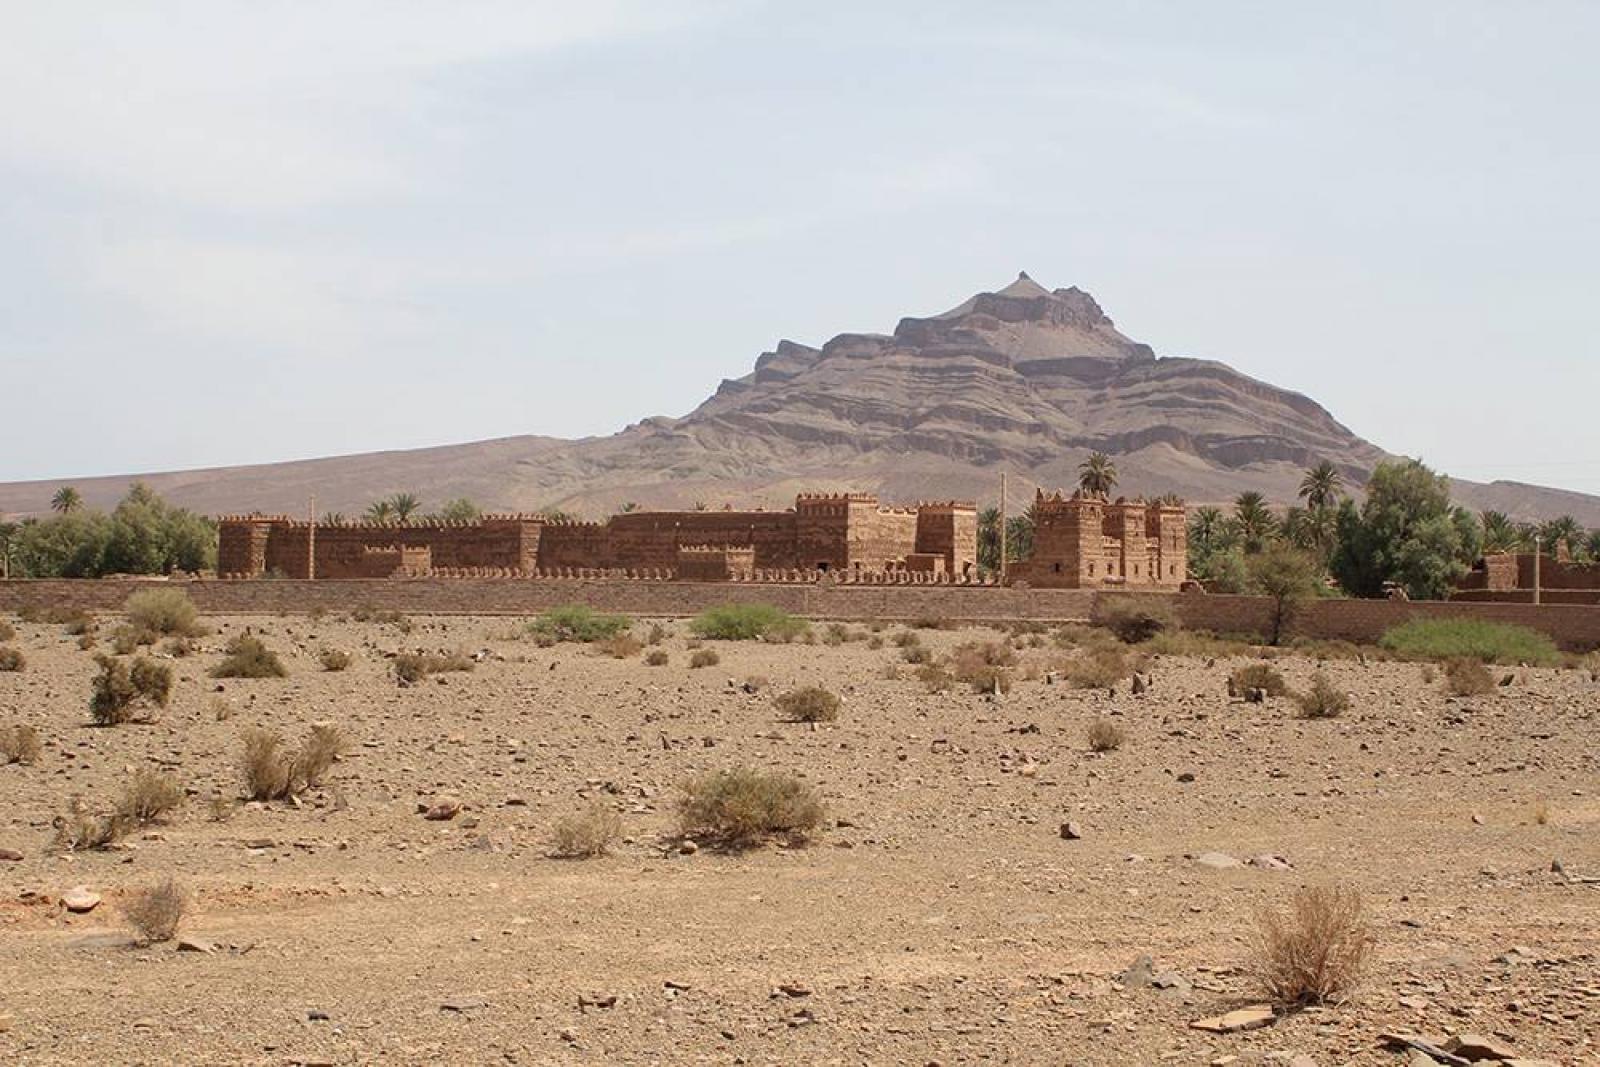 Agdez secret detention center, in the province of Zagora, southeast Morocco